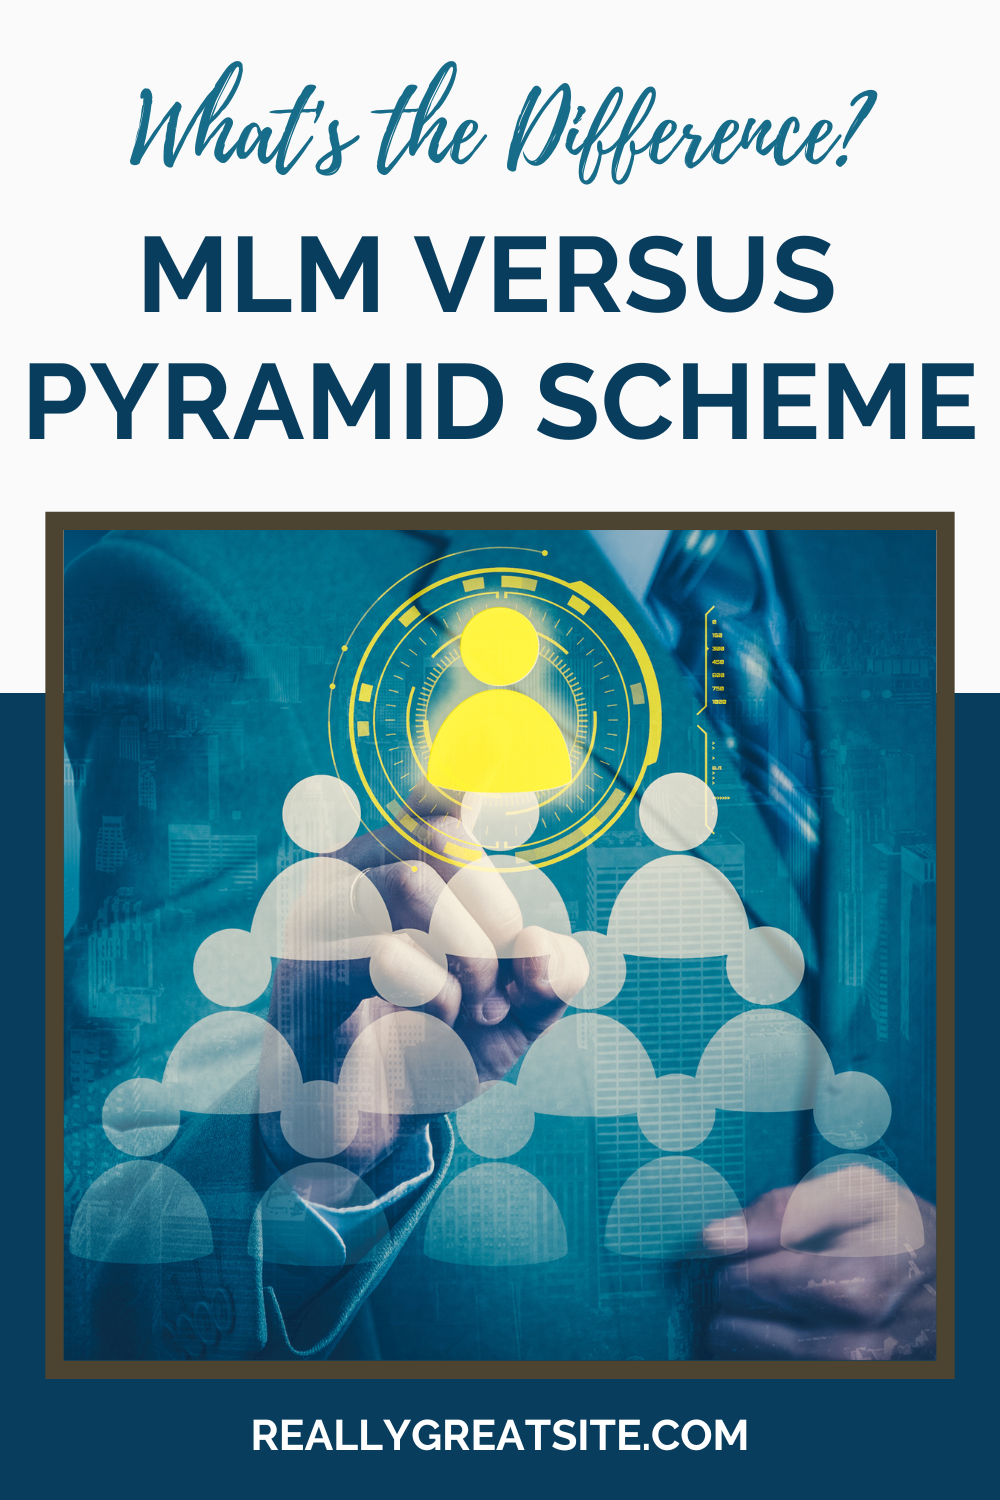 MLM Vs Pyramid Scheme